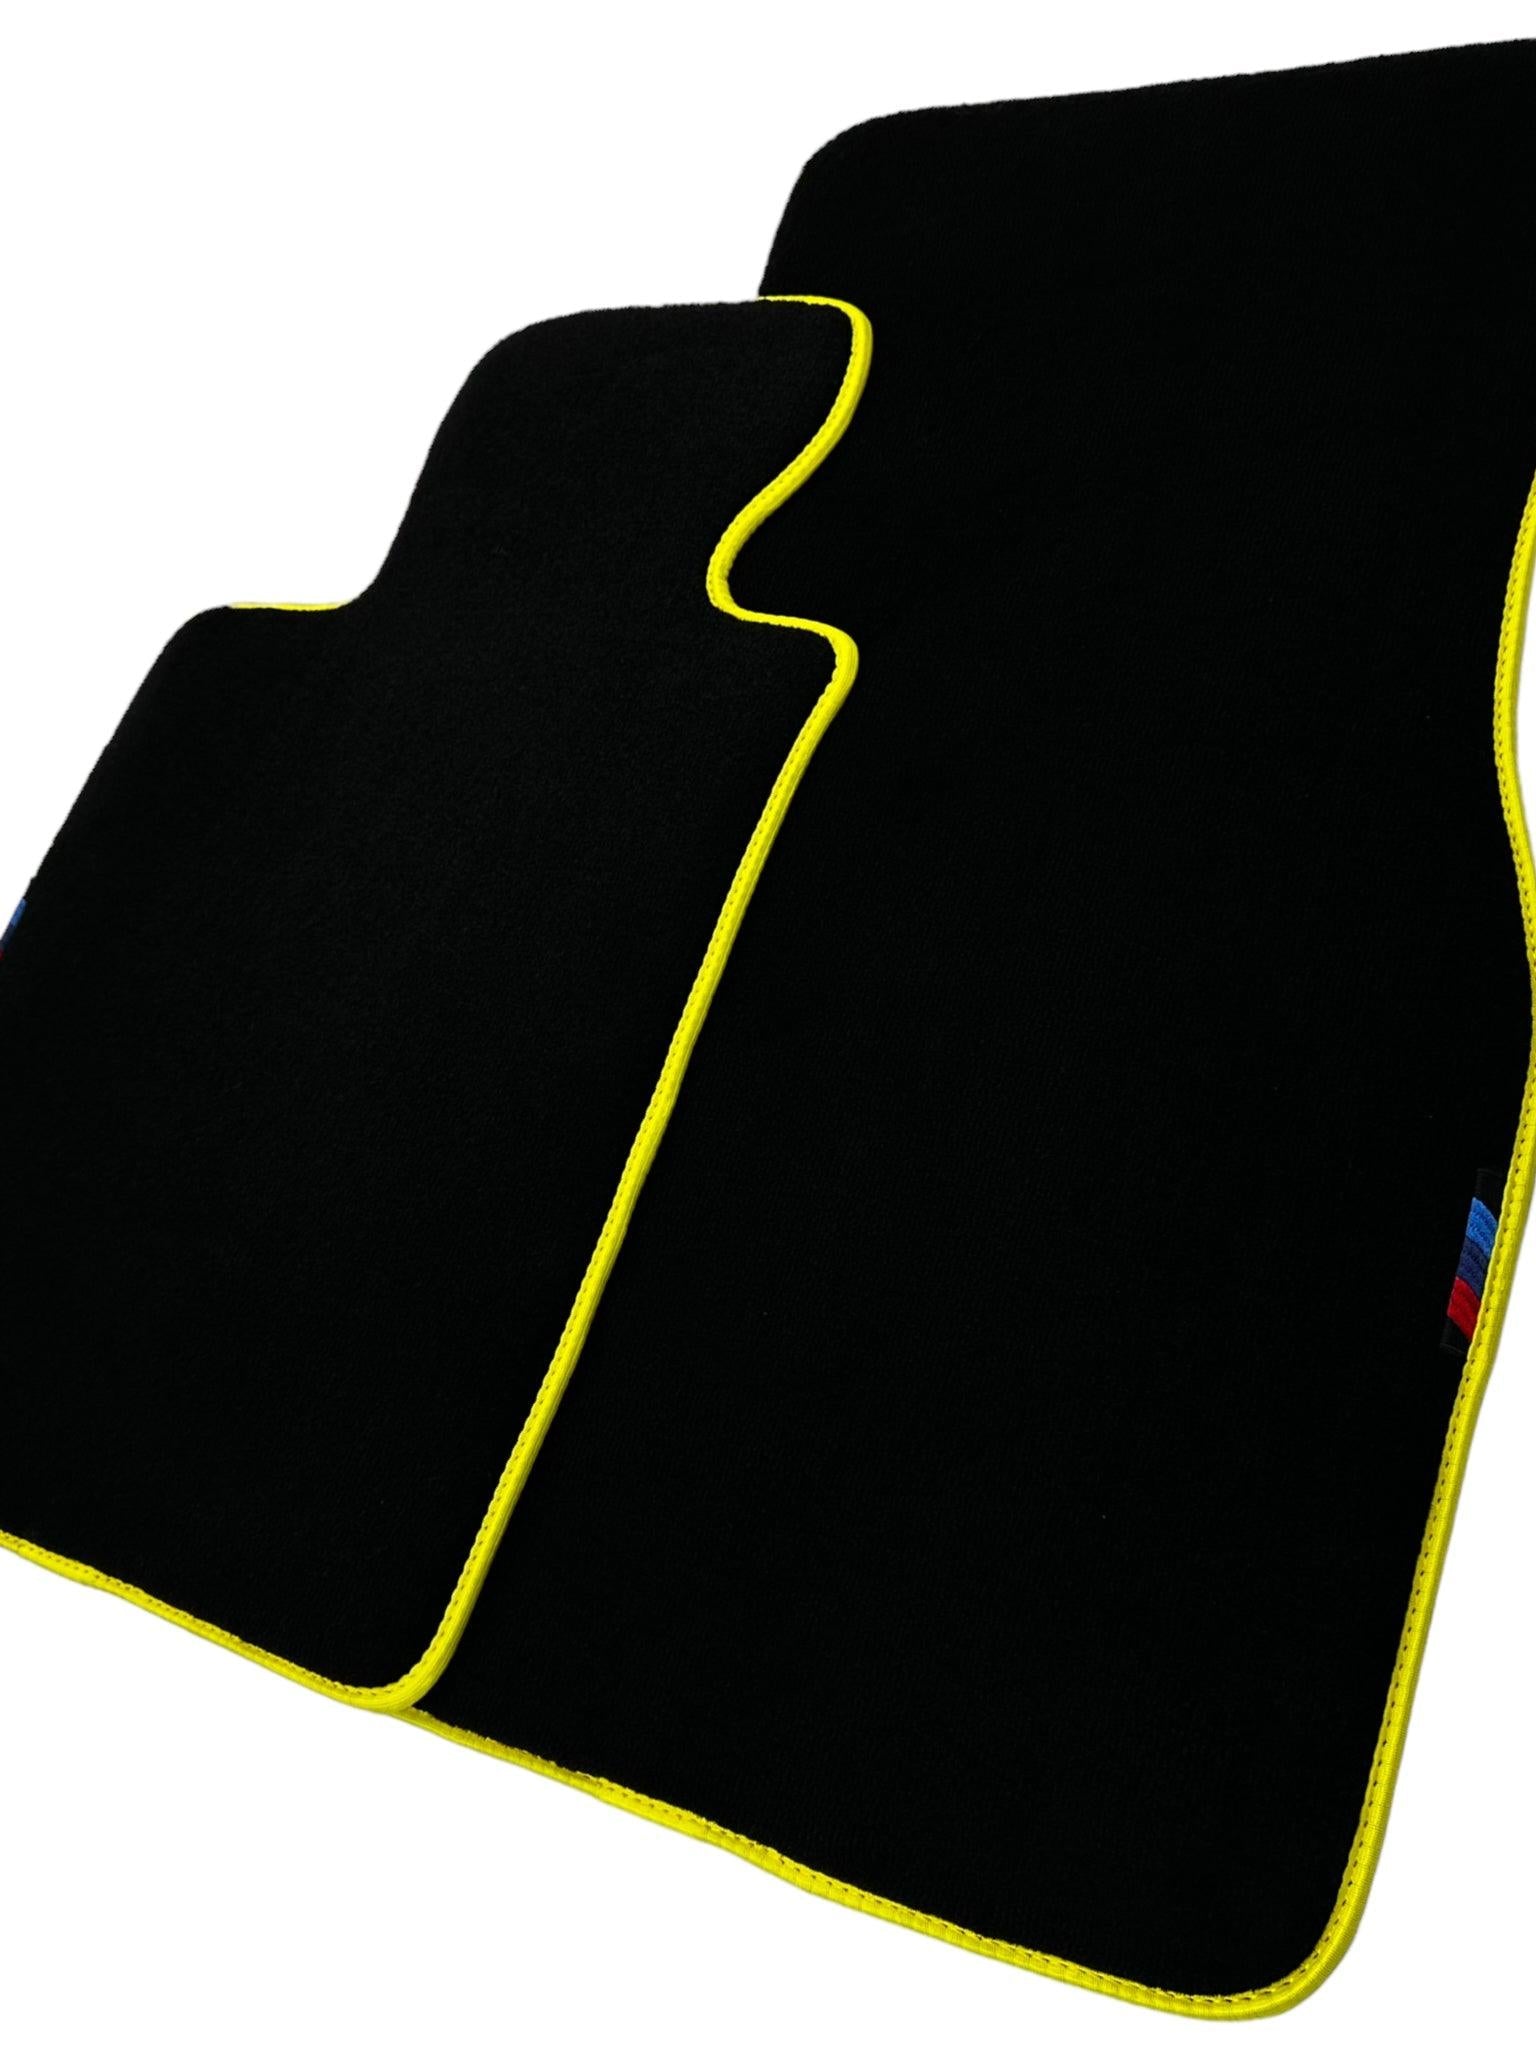 Black Floor Floor Mats For BMW 7 Series G12 | Fighter Jet Edition AutoWin Brand | Yellow Trim